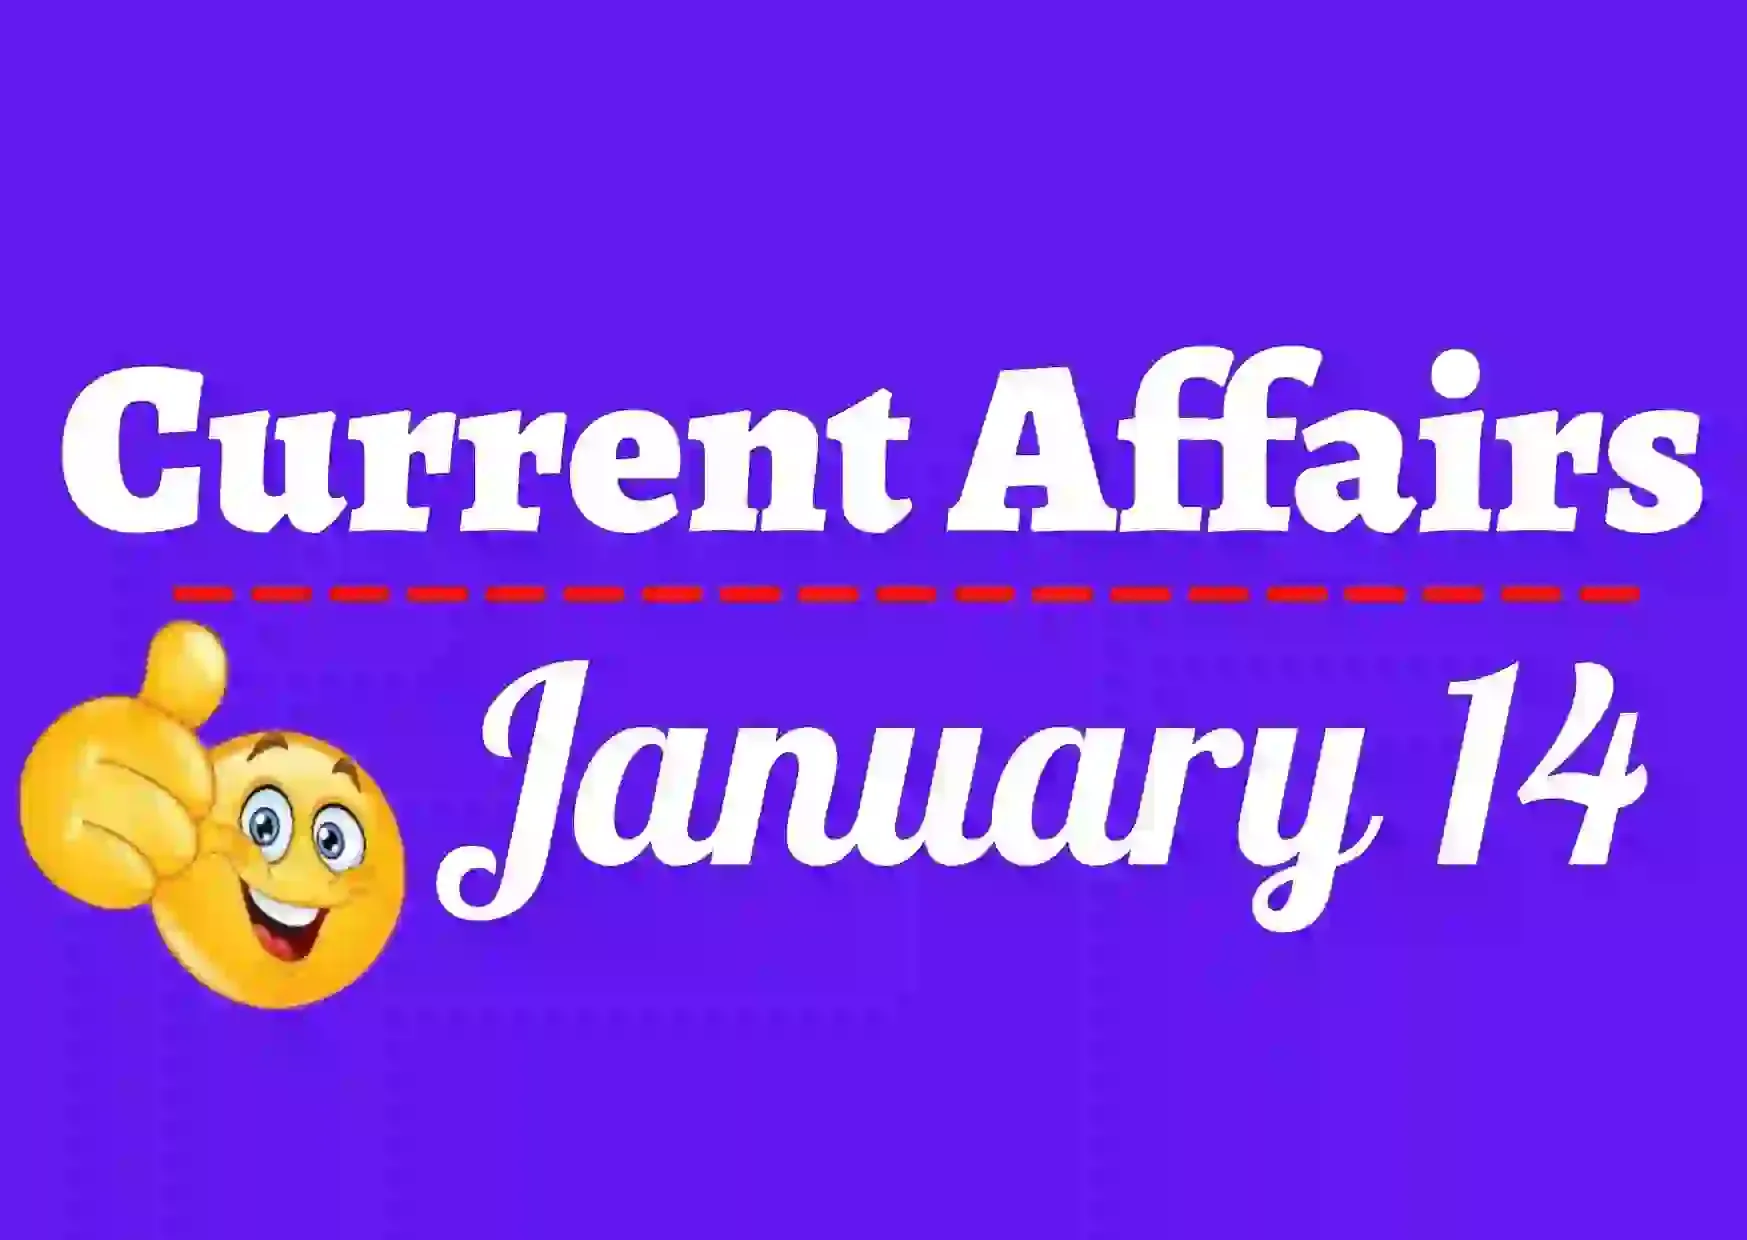 Current Affairs January 14